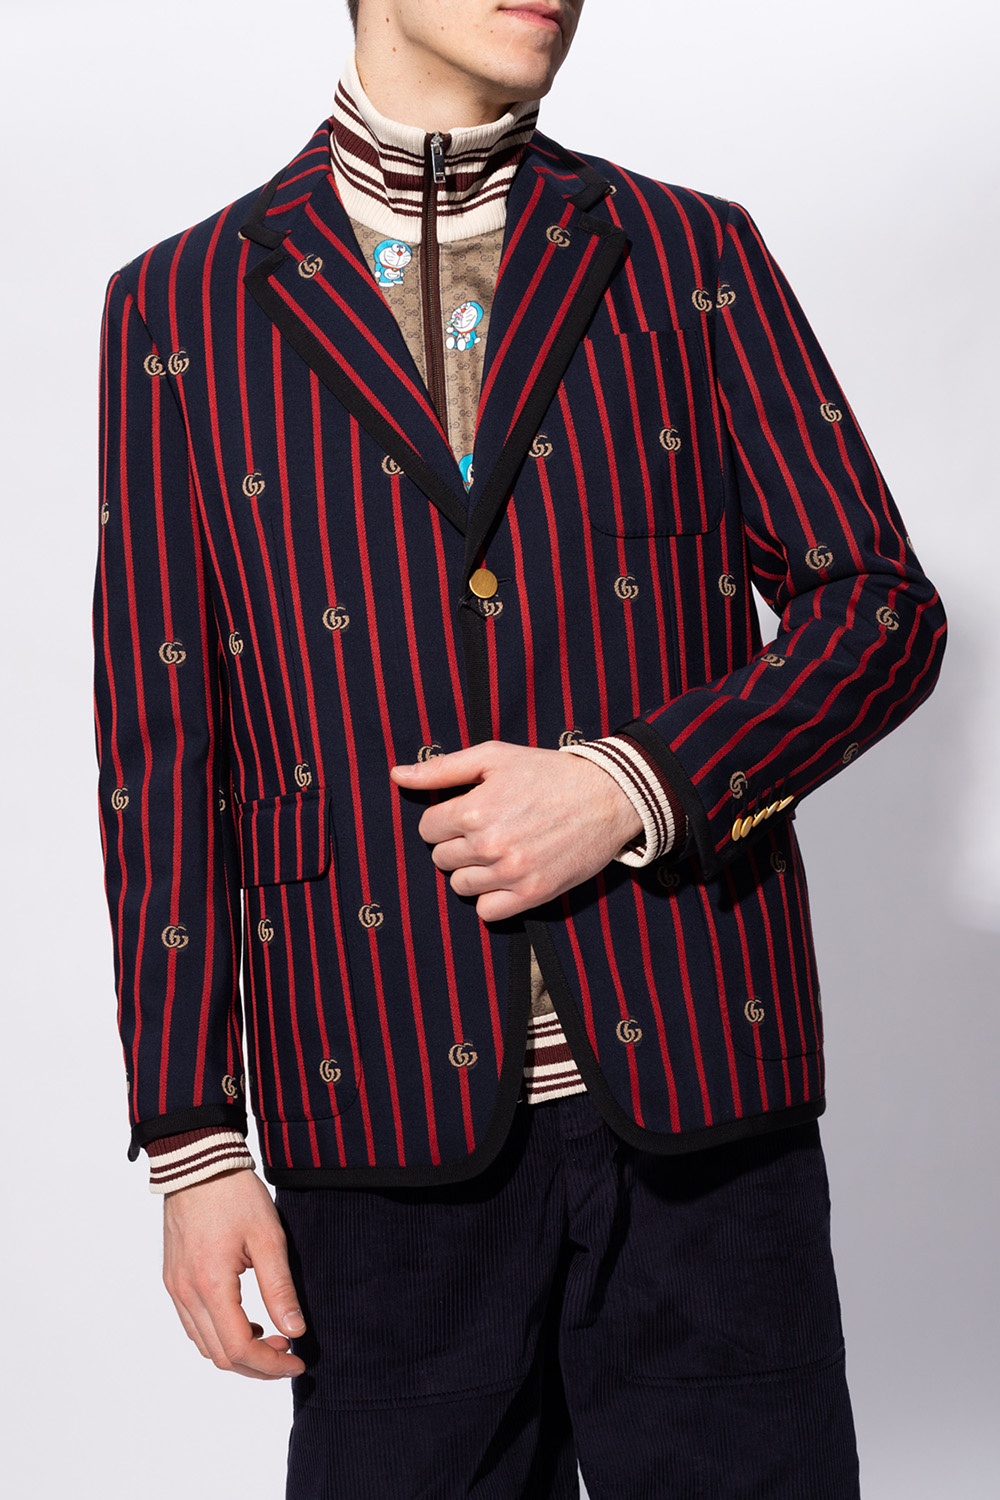 Gucci Patterned blazer